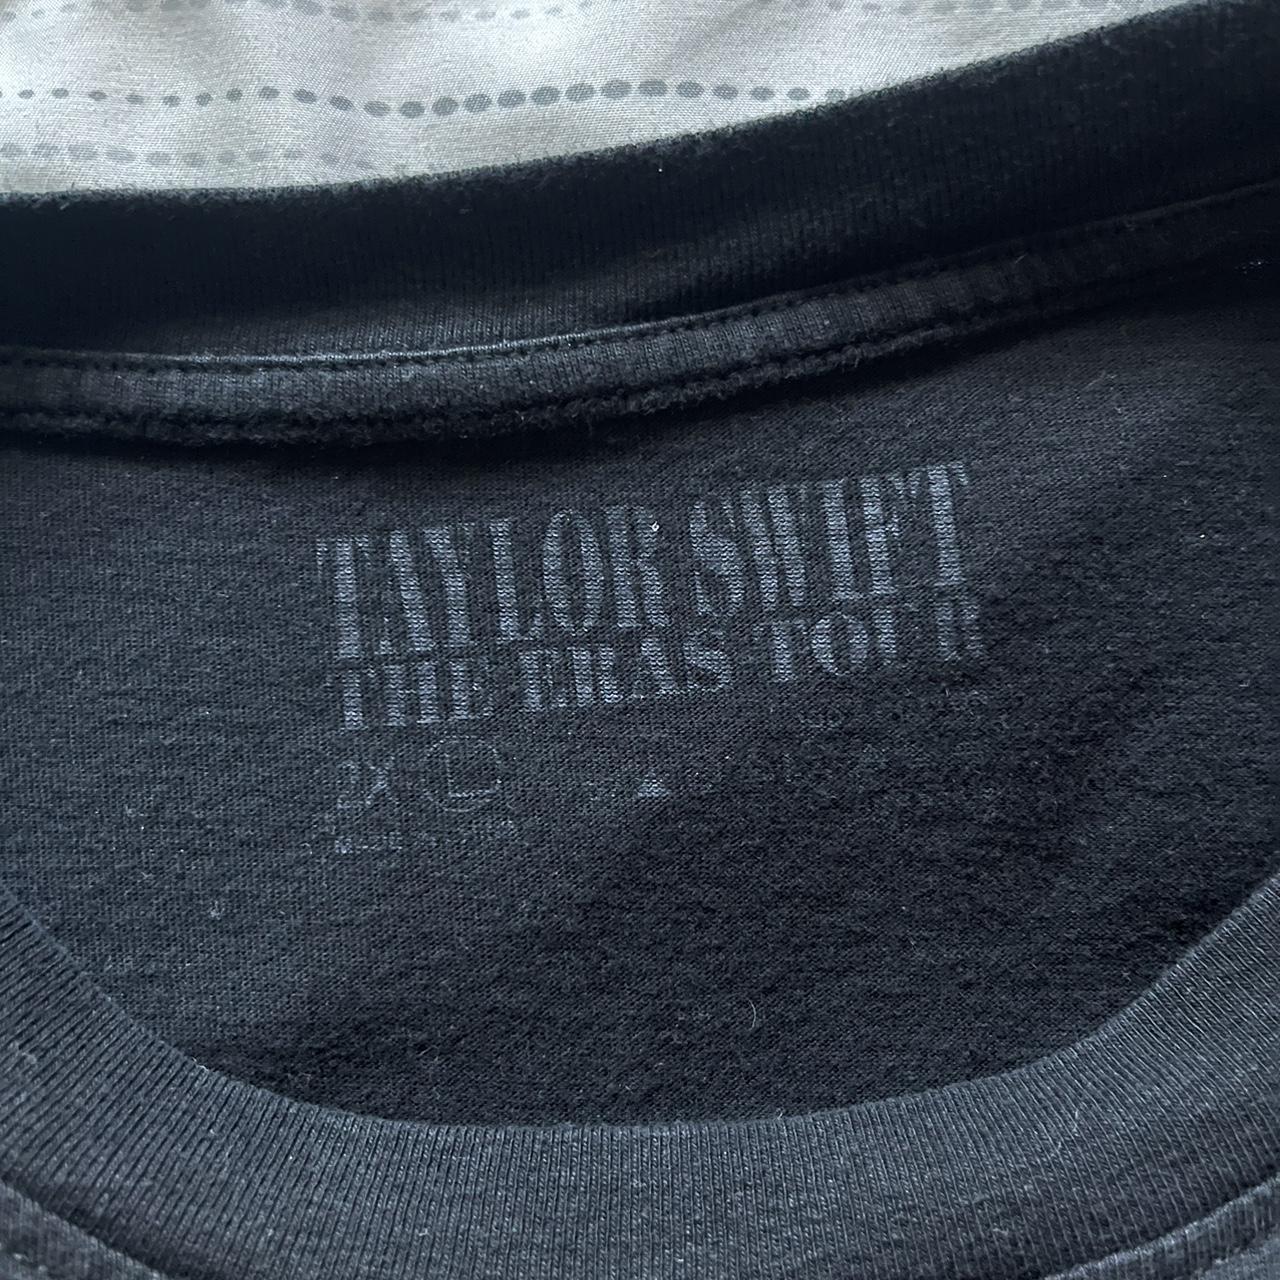 TAYLOR SWIFT THE ERAS TOUR Black T-Shirt Merch (has... - Depop